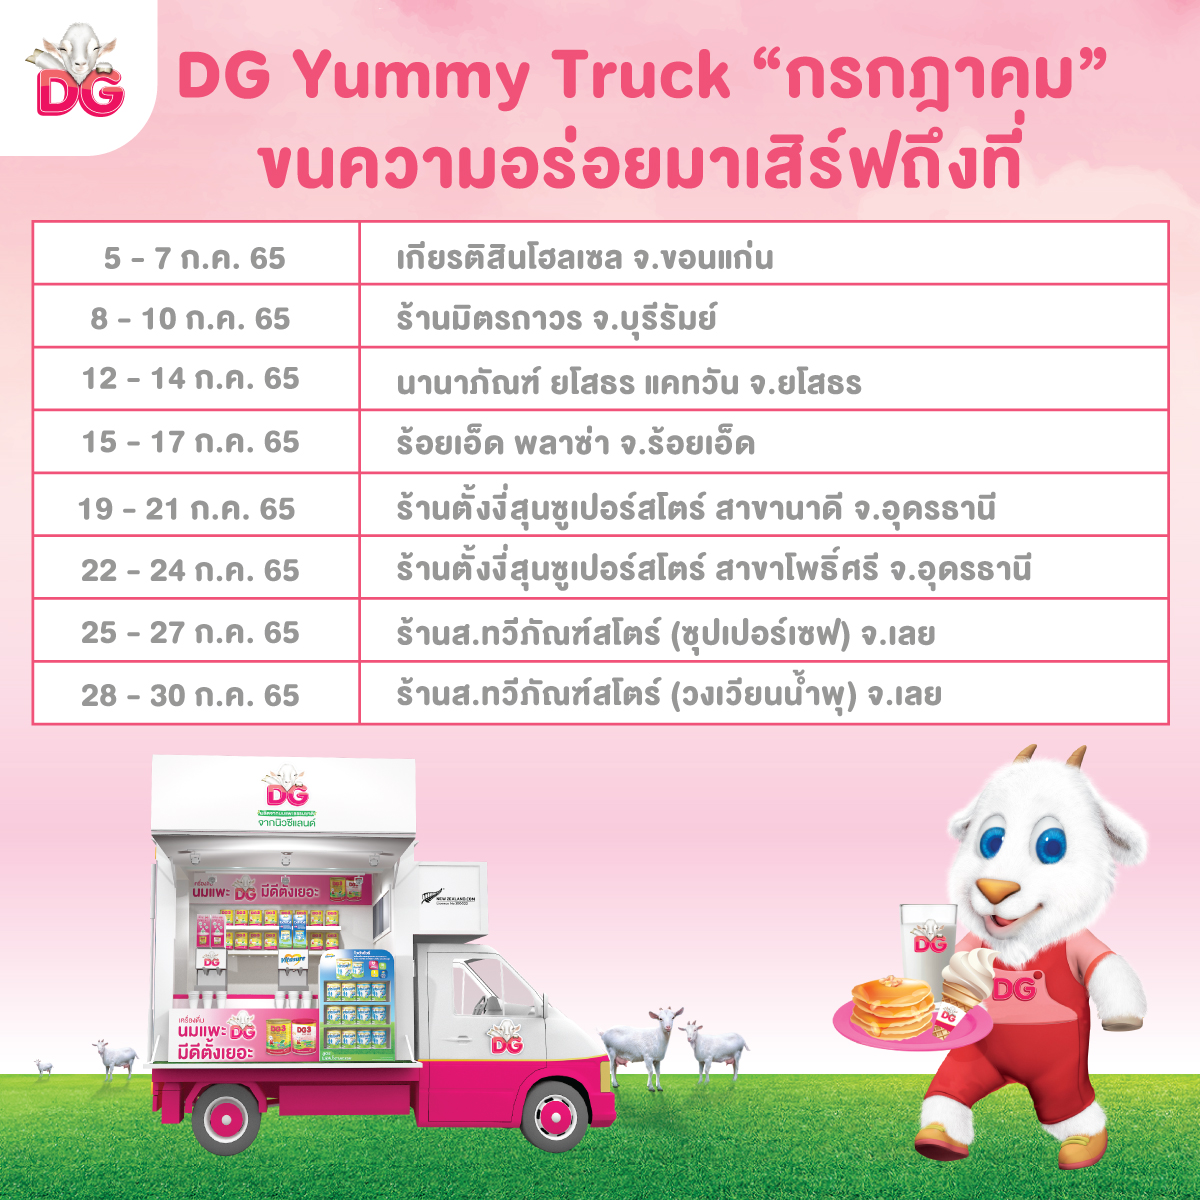 DG Yummy Truck